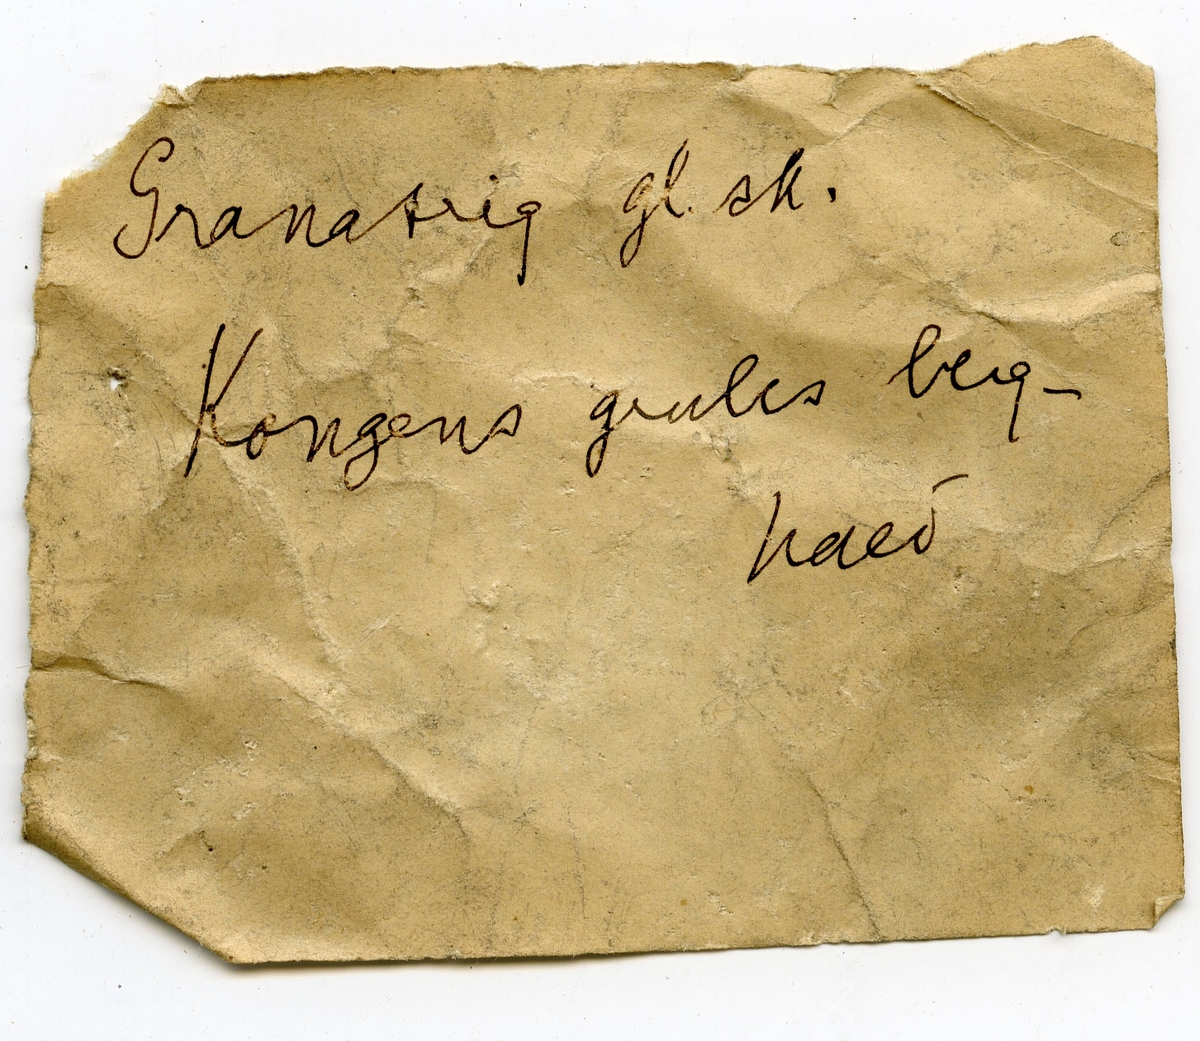 To prøver

Papirlapp i eske:
Granatrig gl. sk.
Kongens grubes berghald